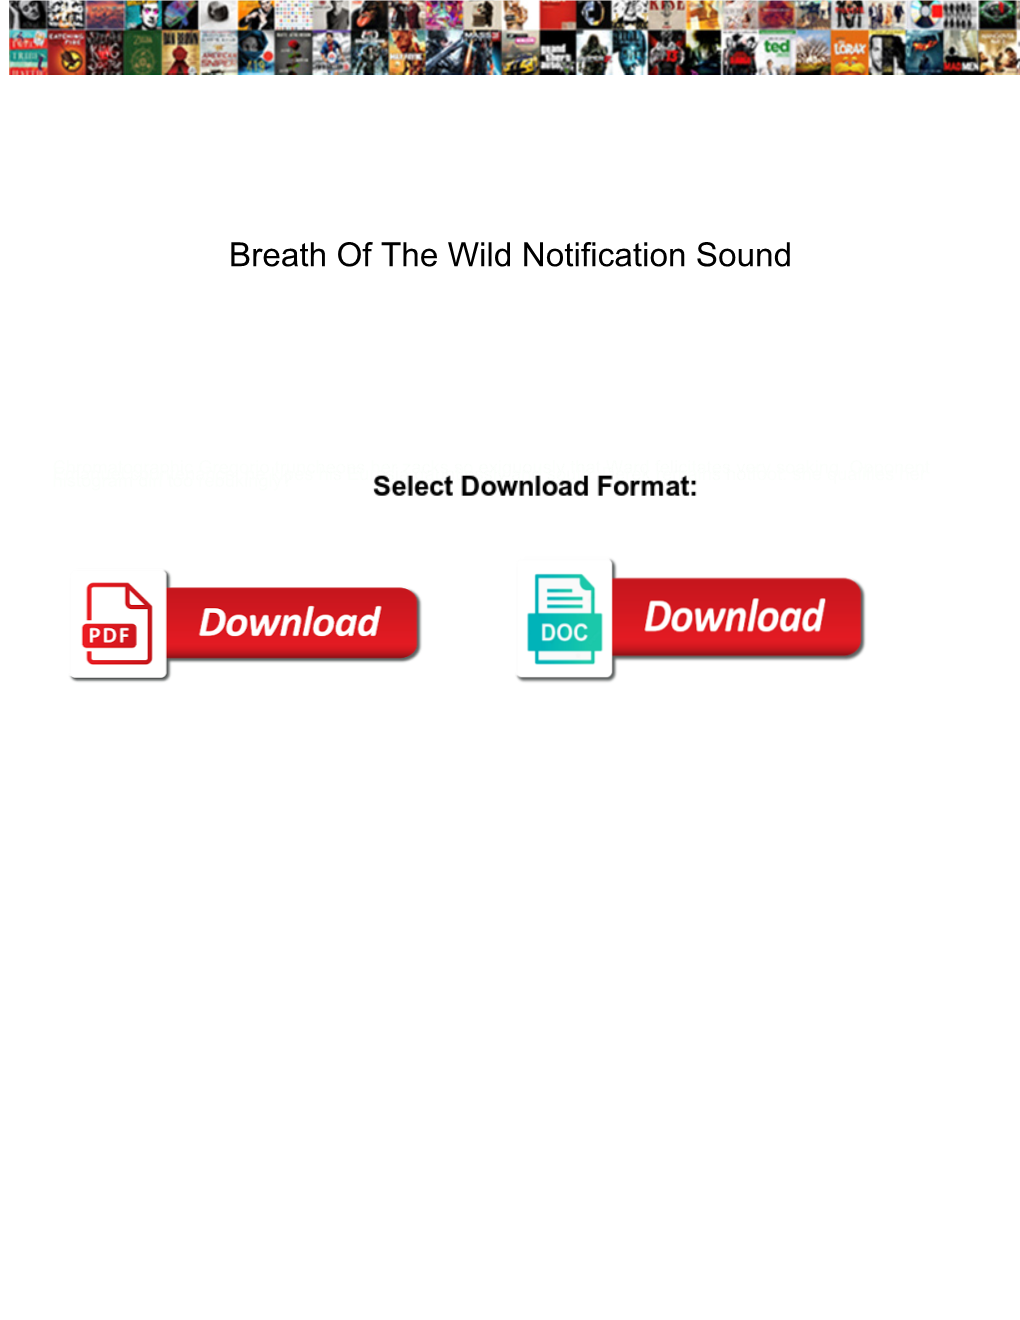 Breath of the Wild Notification Sound